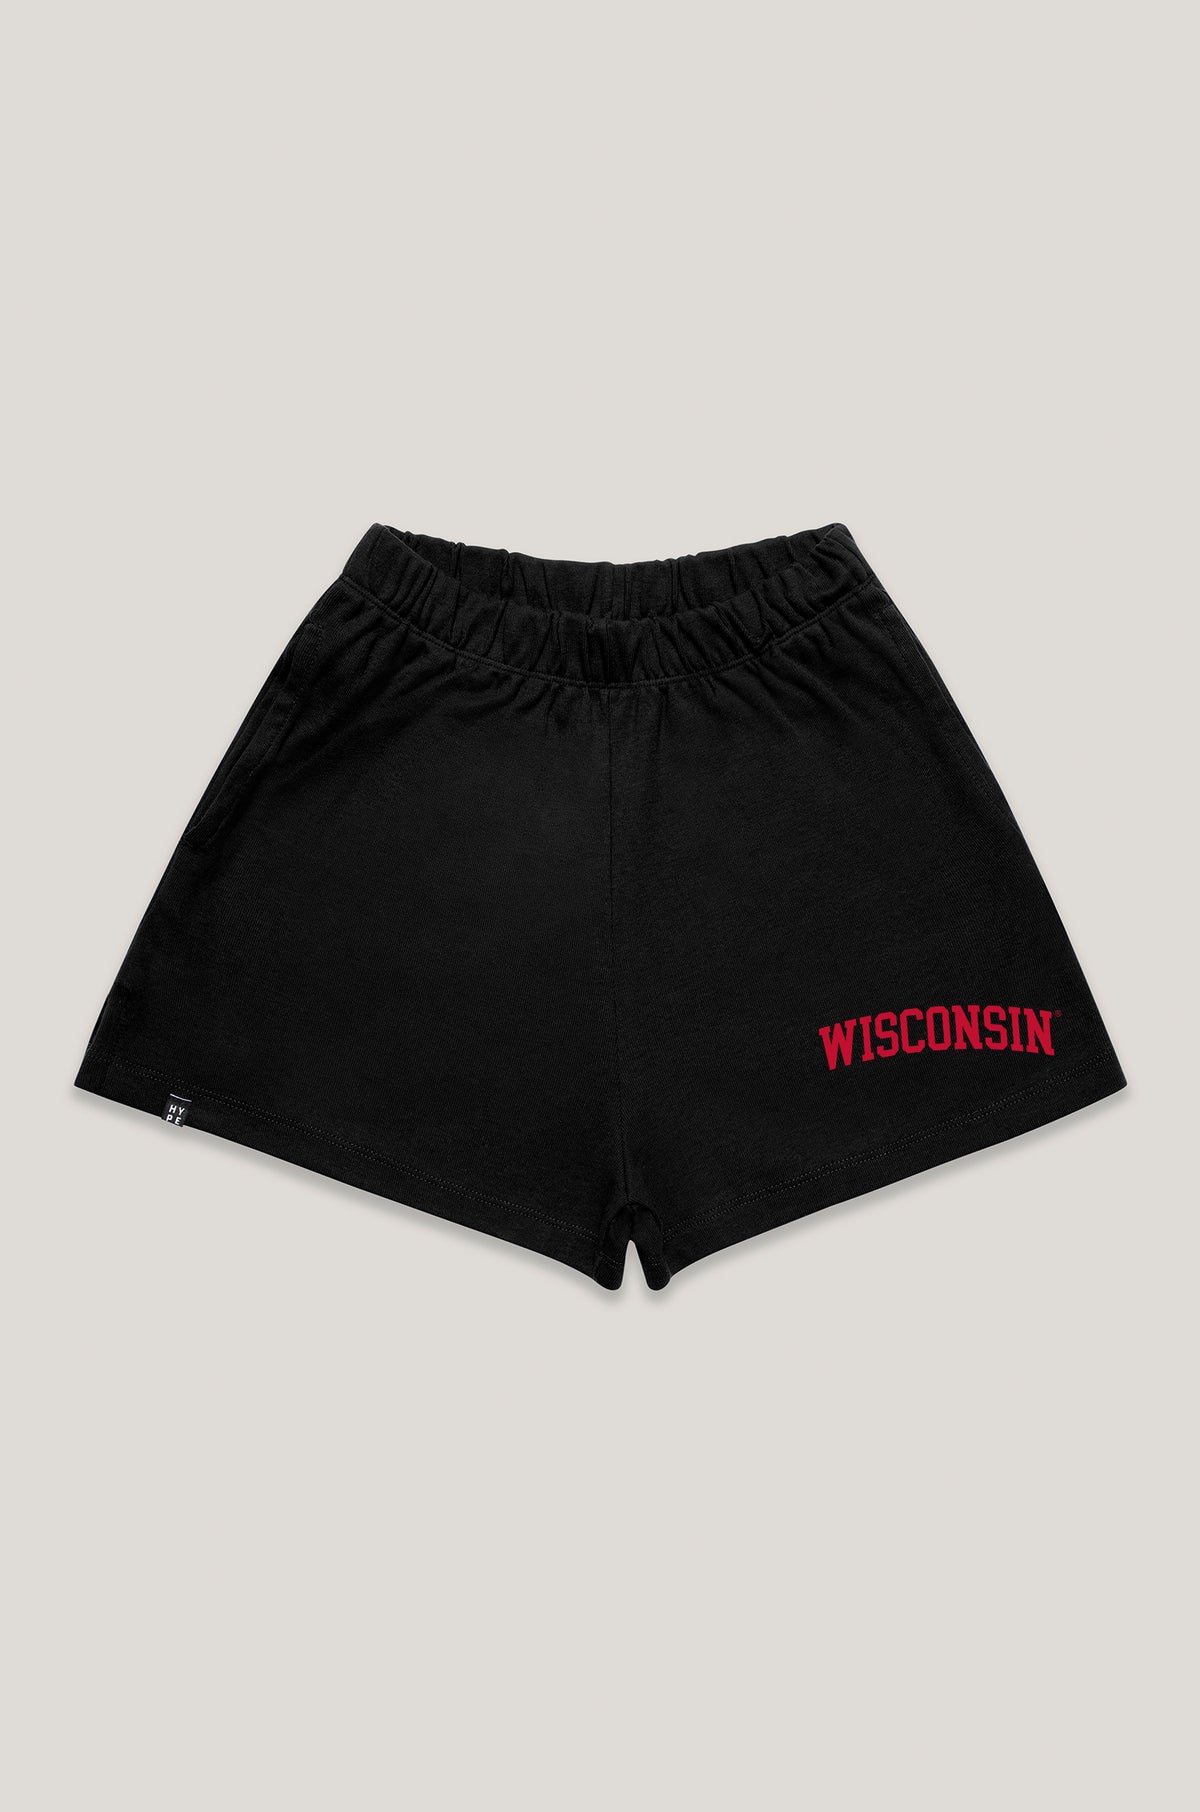 Wisconsin Track Shorts